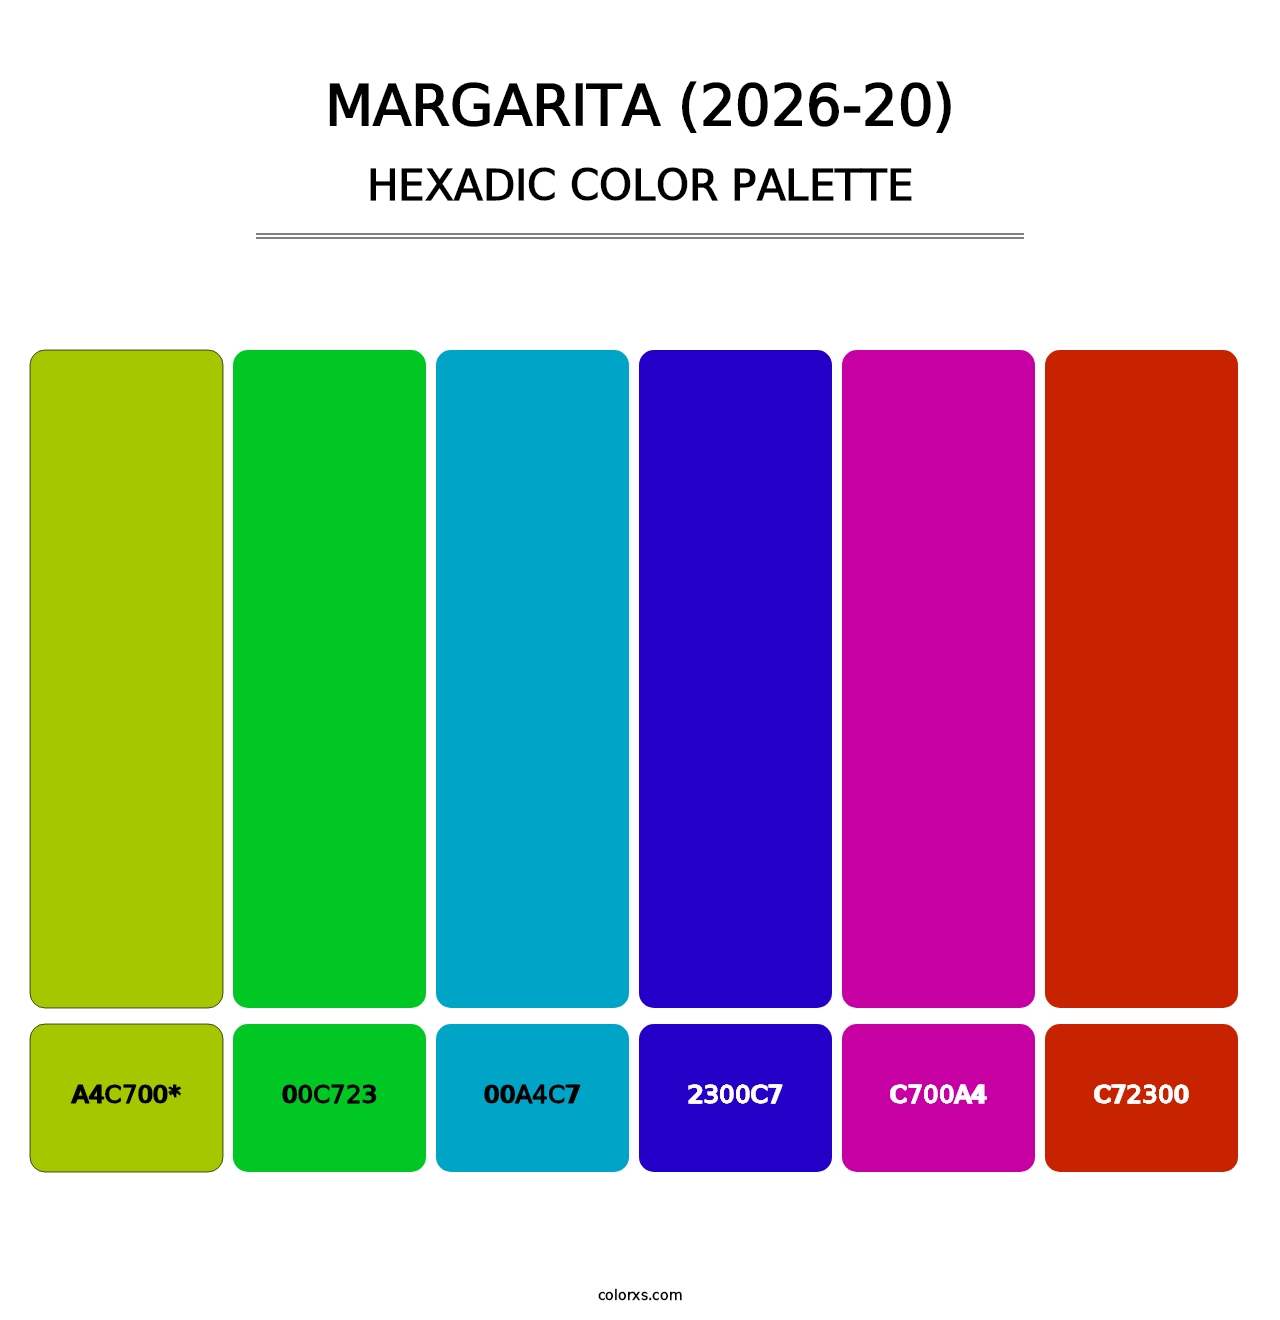 Margarita (2026-20) - Hexadic Color Palette